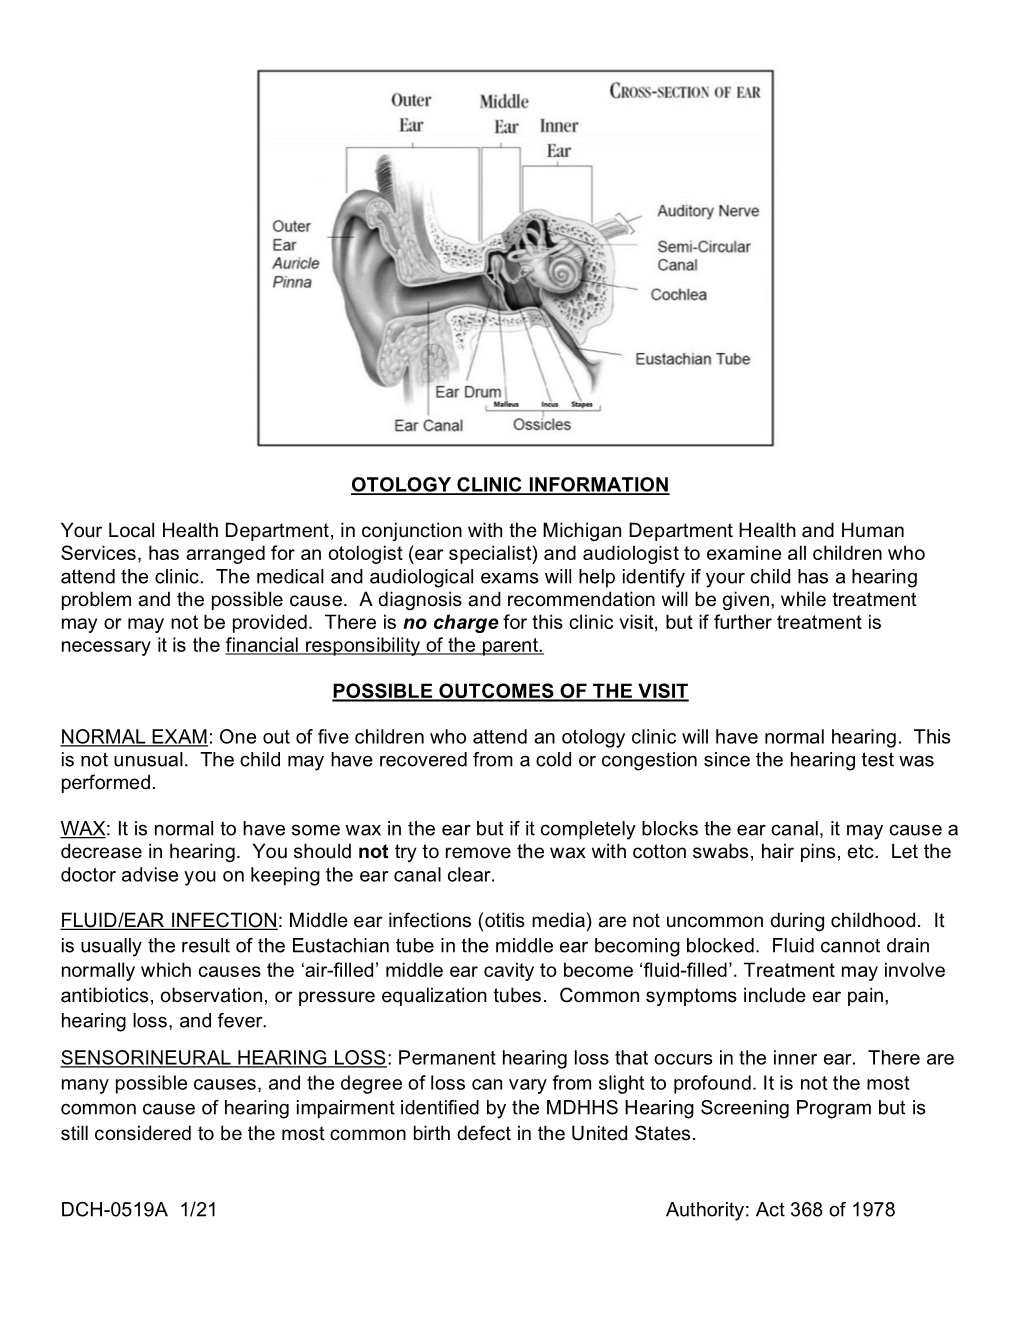 Otology Clinic Information, DCH-0519A